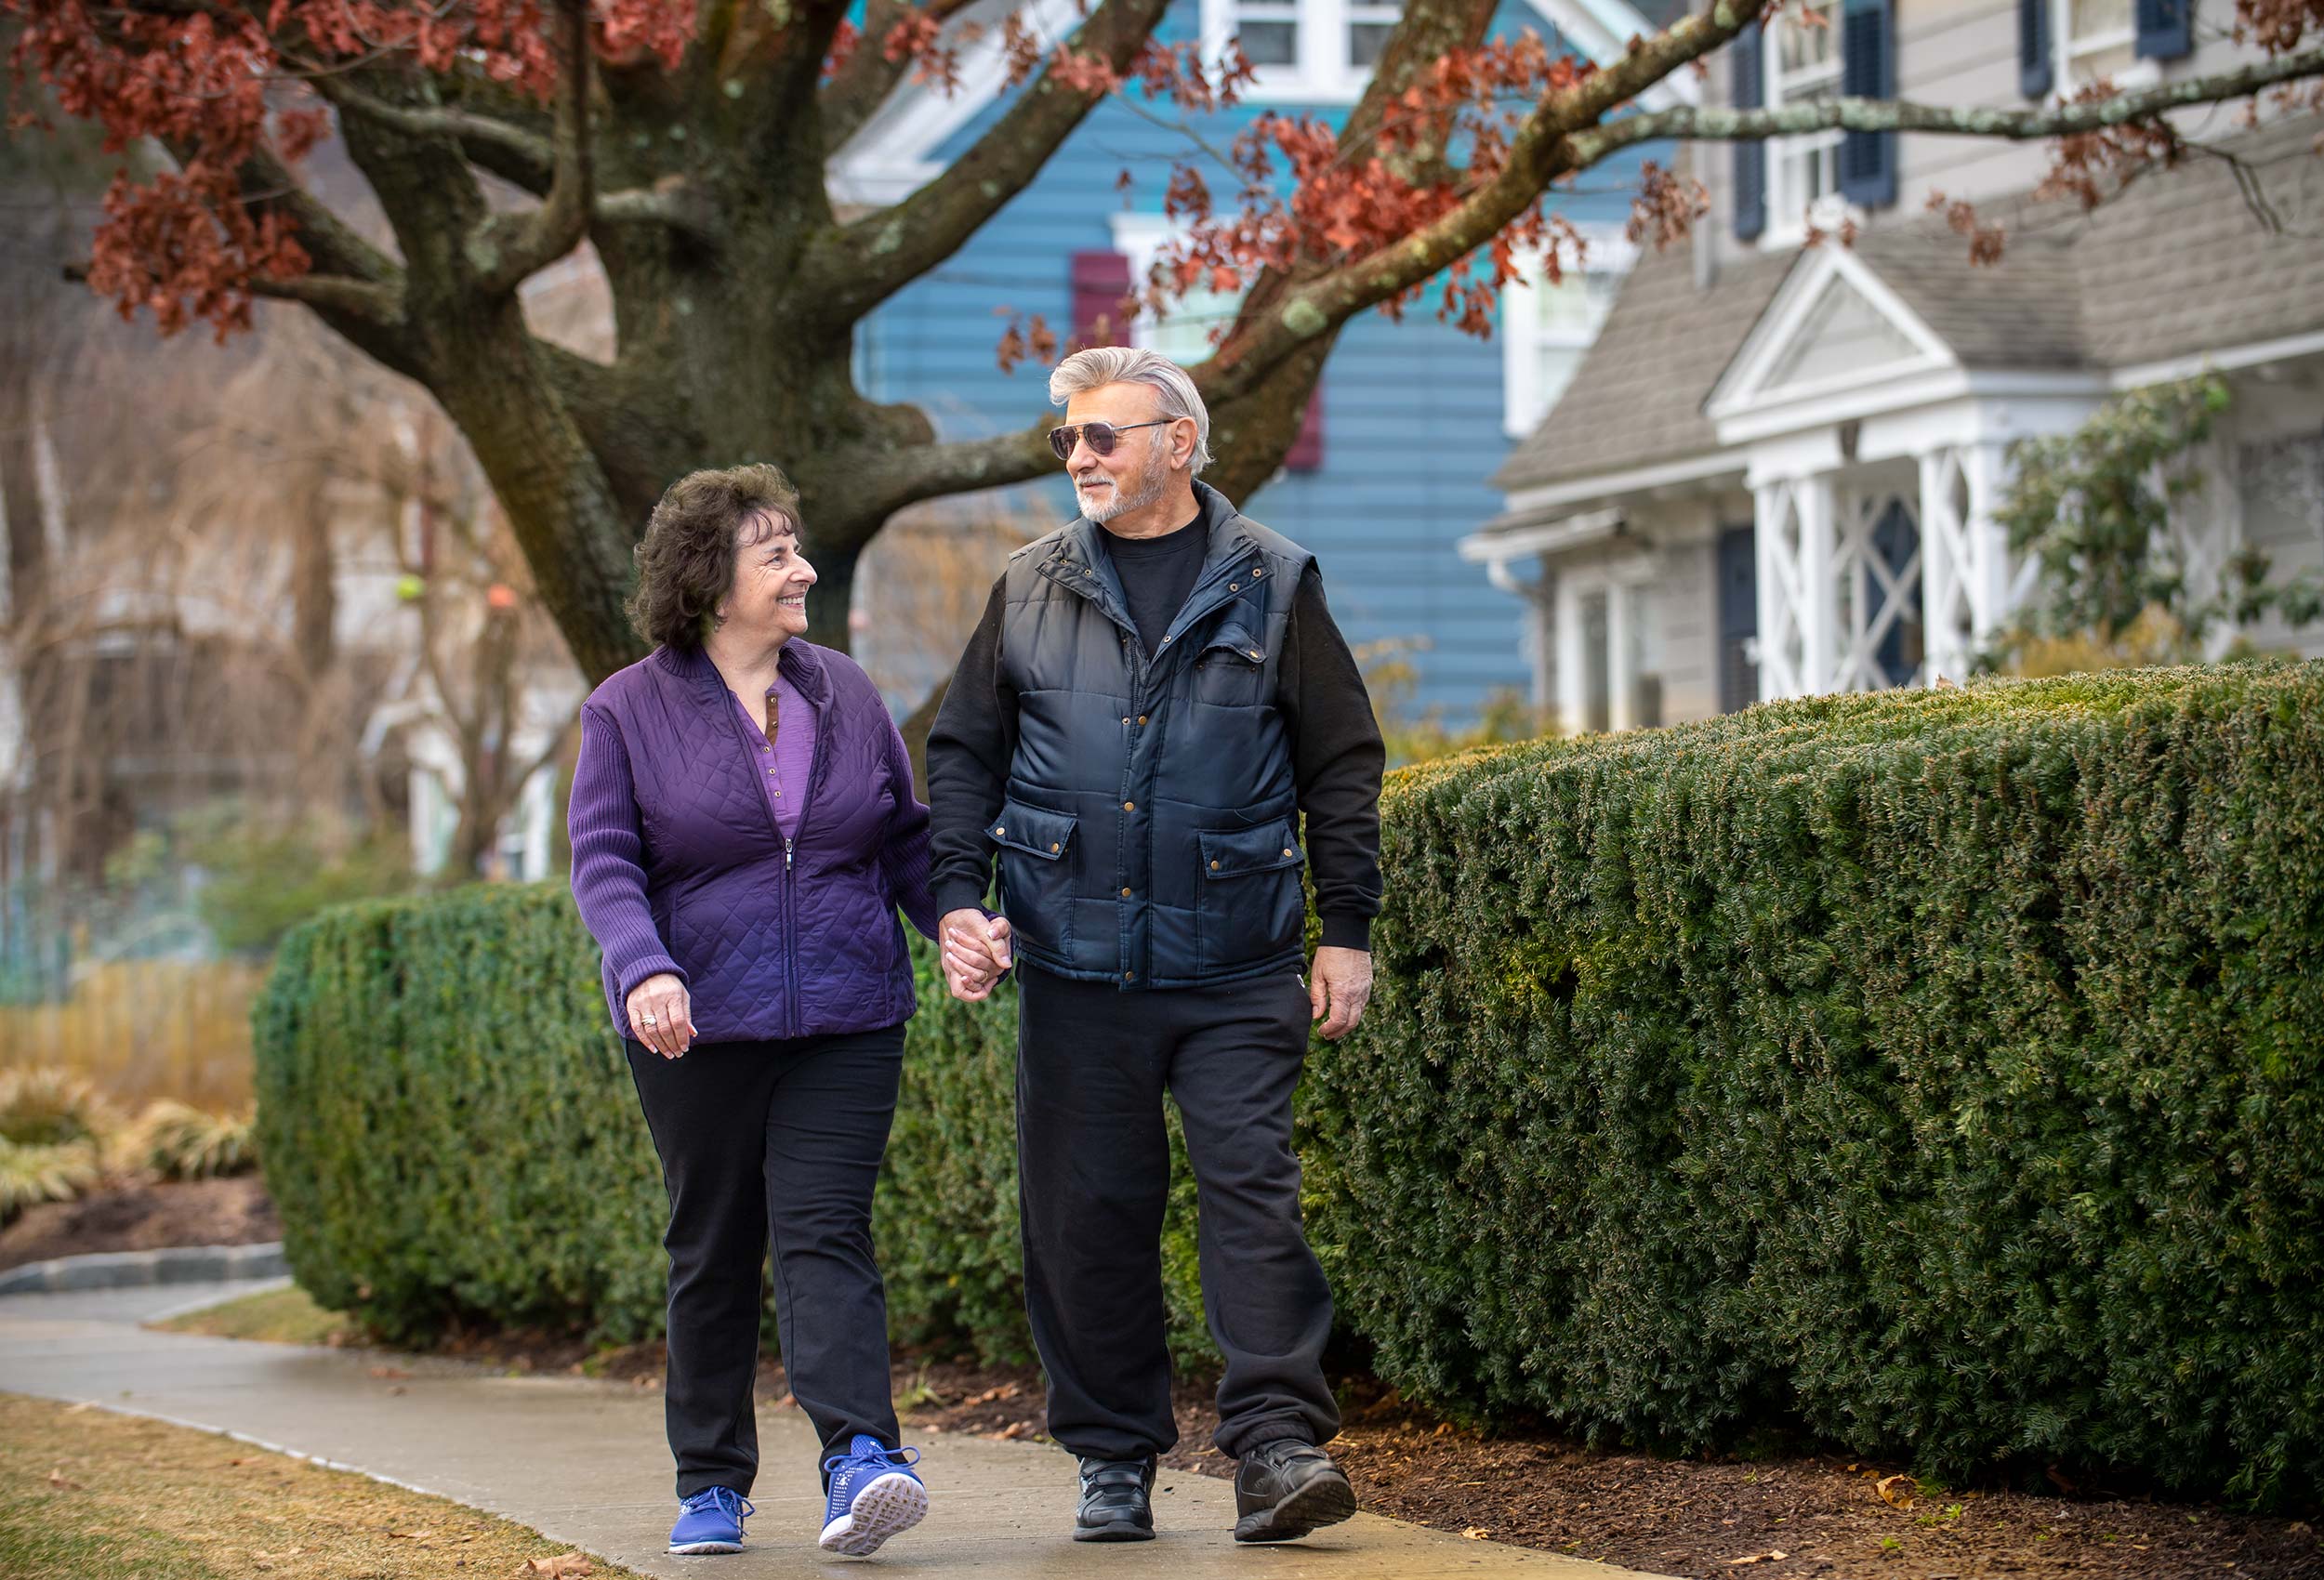 Senior citizens walk on sidewalk in suburban neighborhood